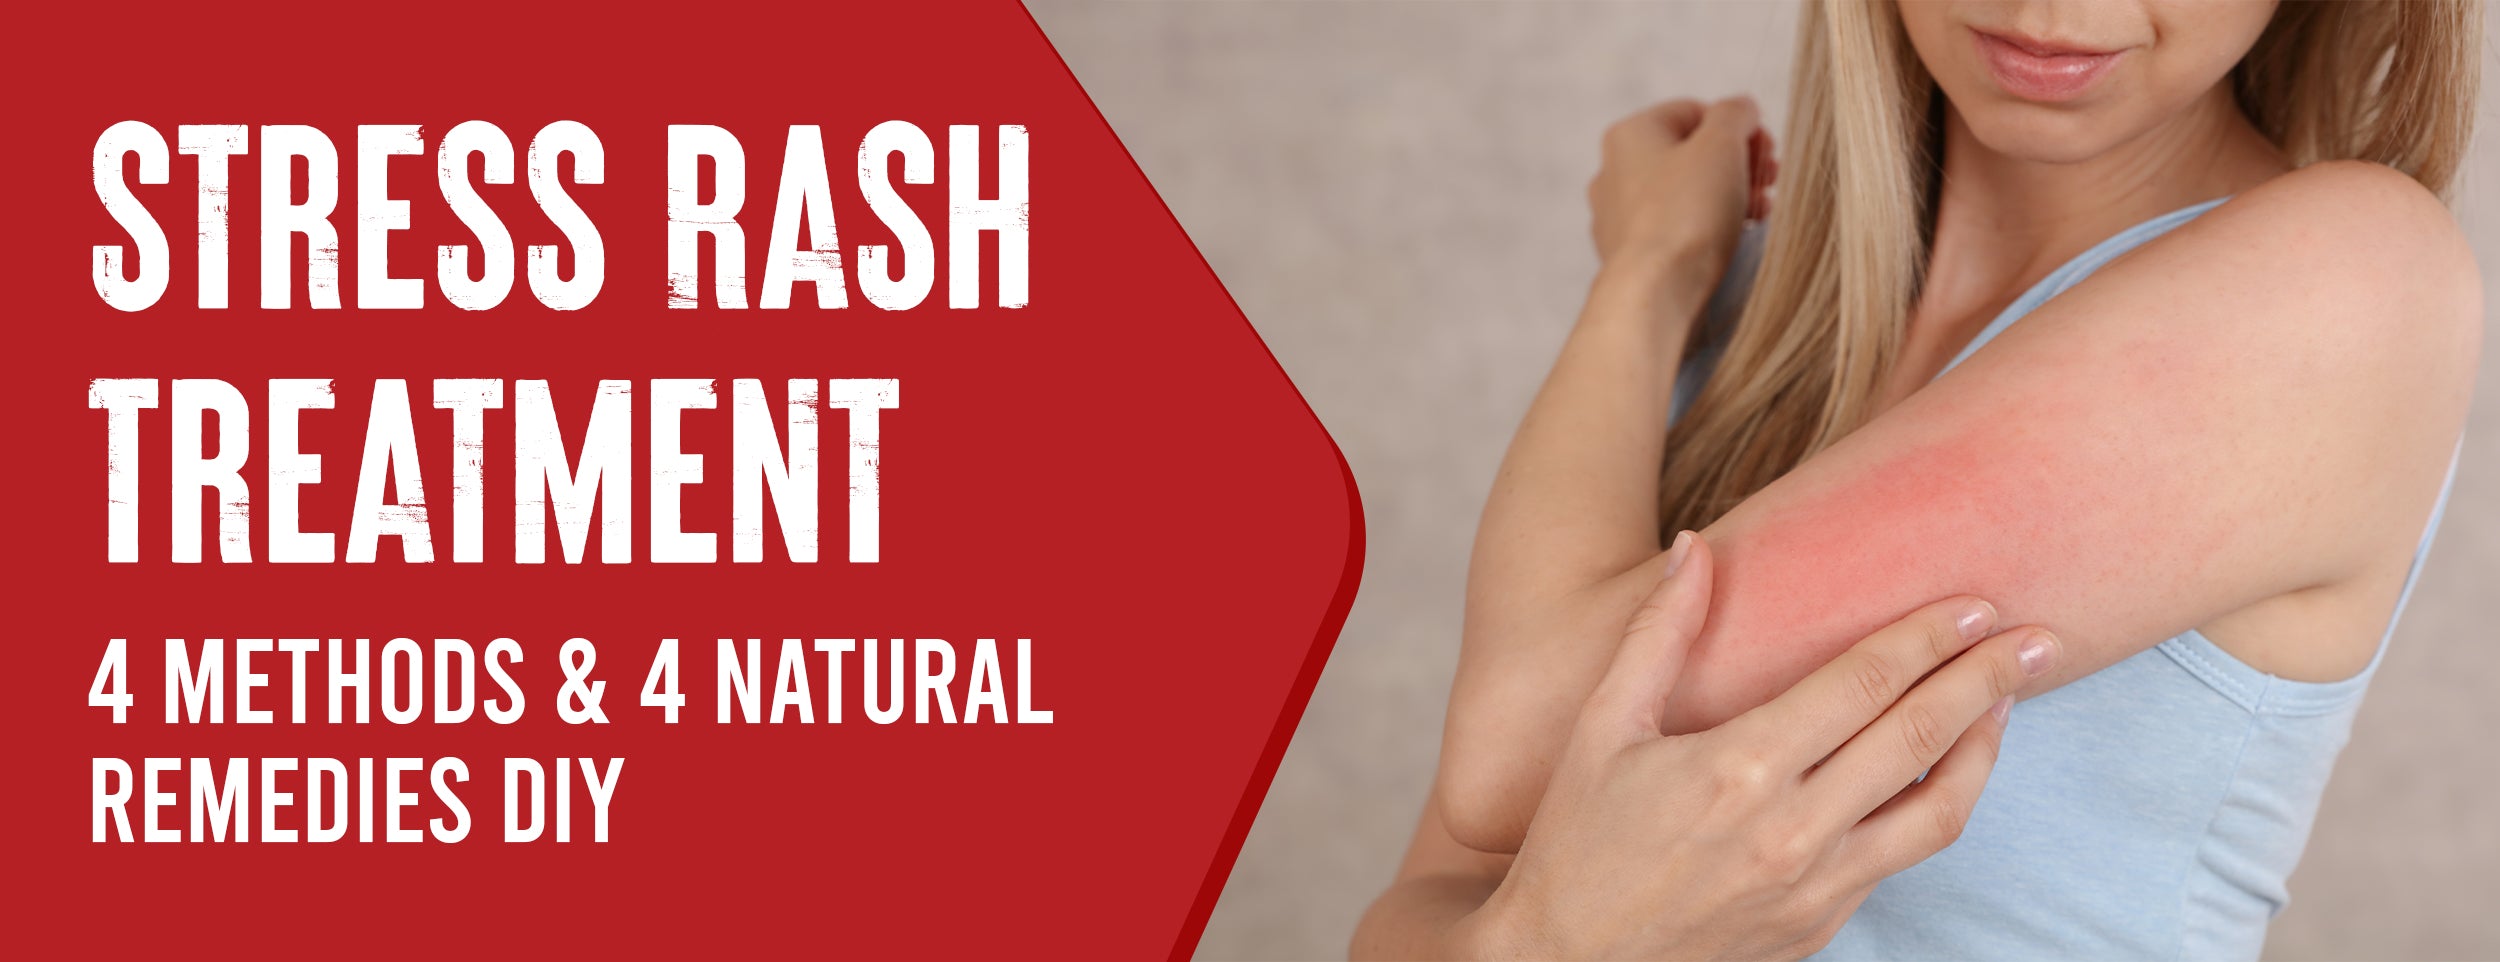 Treatment for Stress Rash: 2 Easy Ways & 4 Prevention Tips